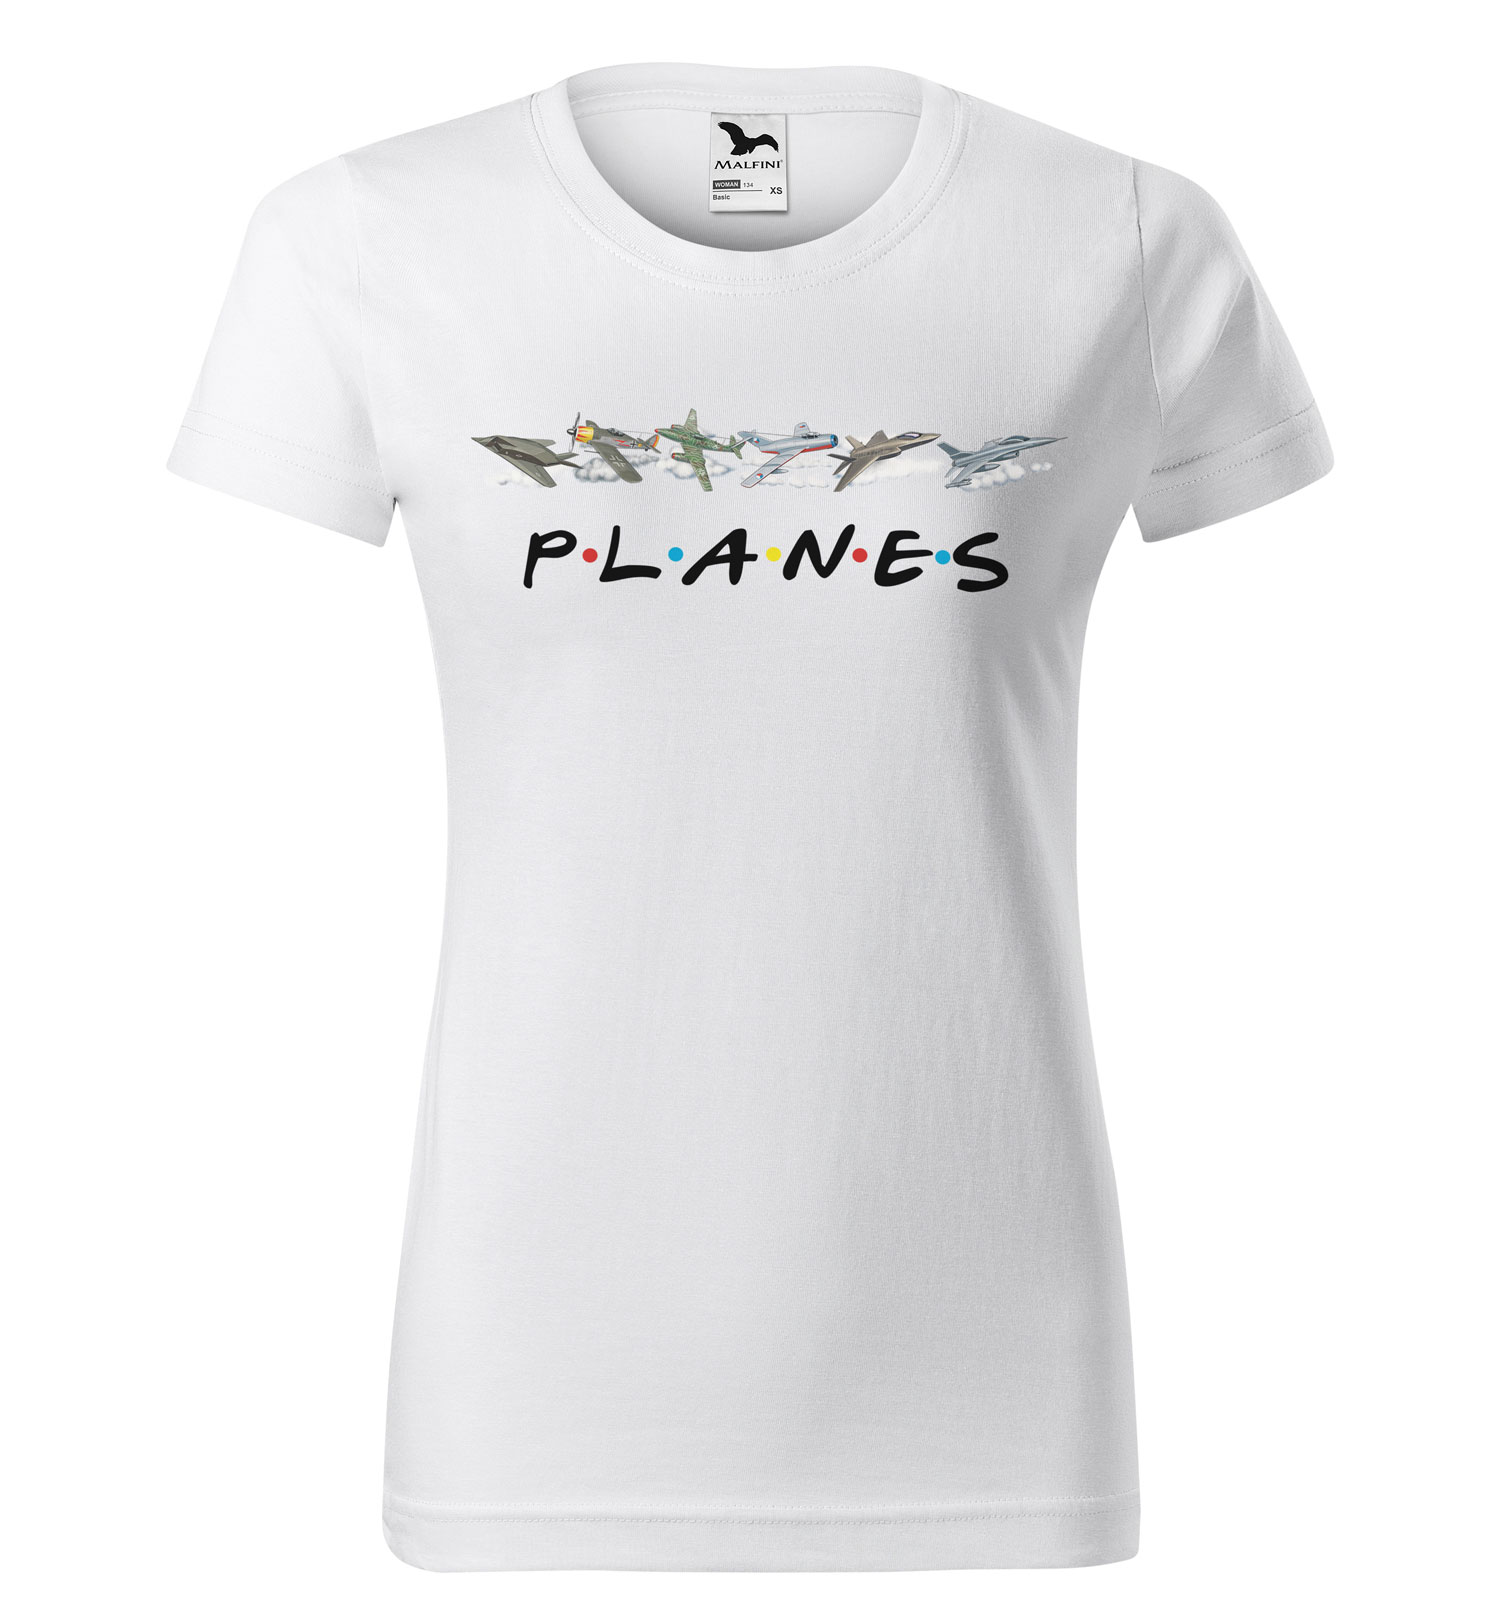 Tričko Planes (Velikost: M, Typ: pro ženy, Barva trička: Bílá)